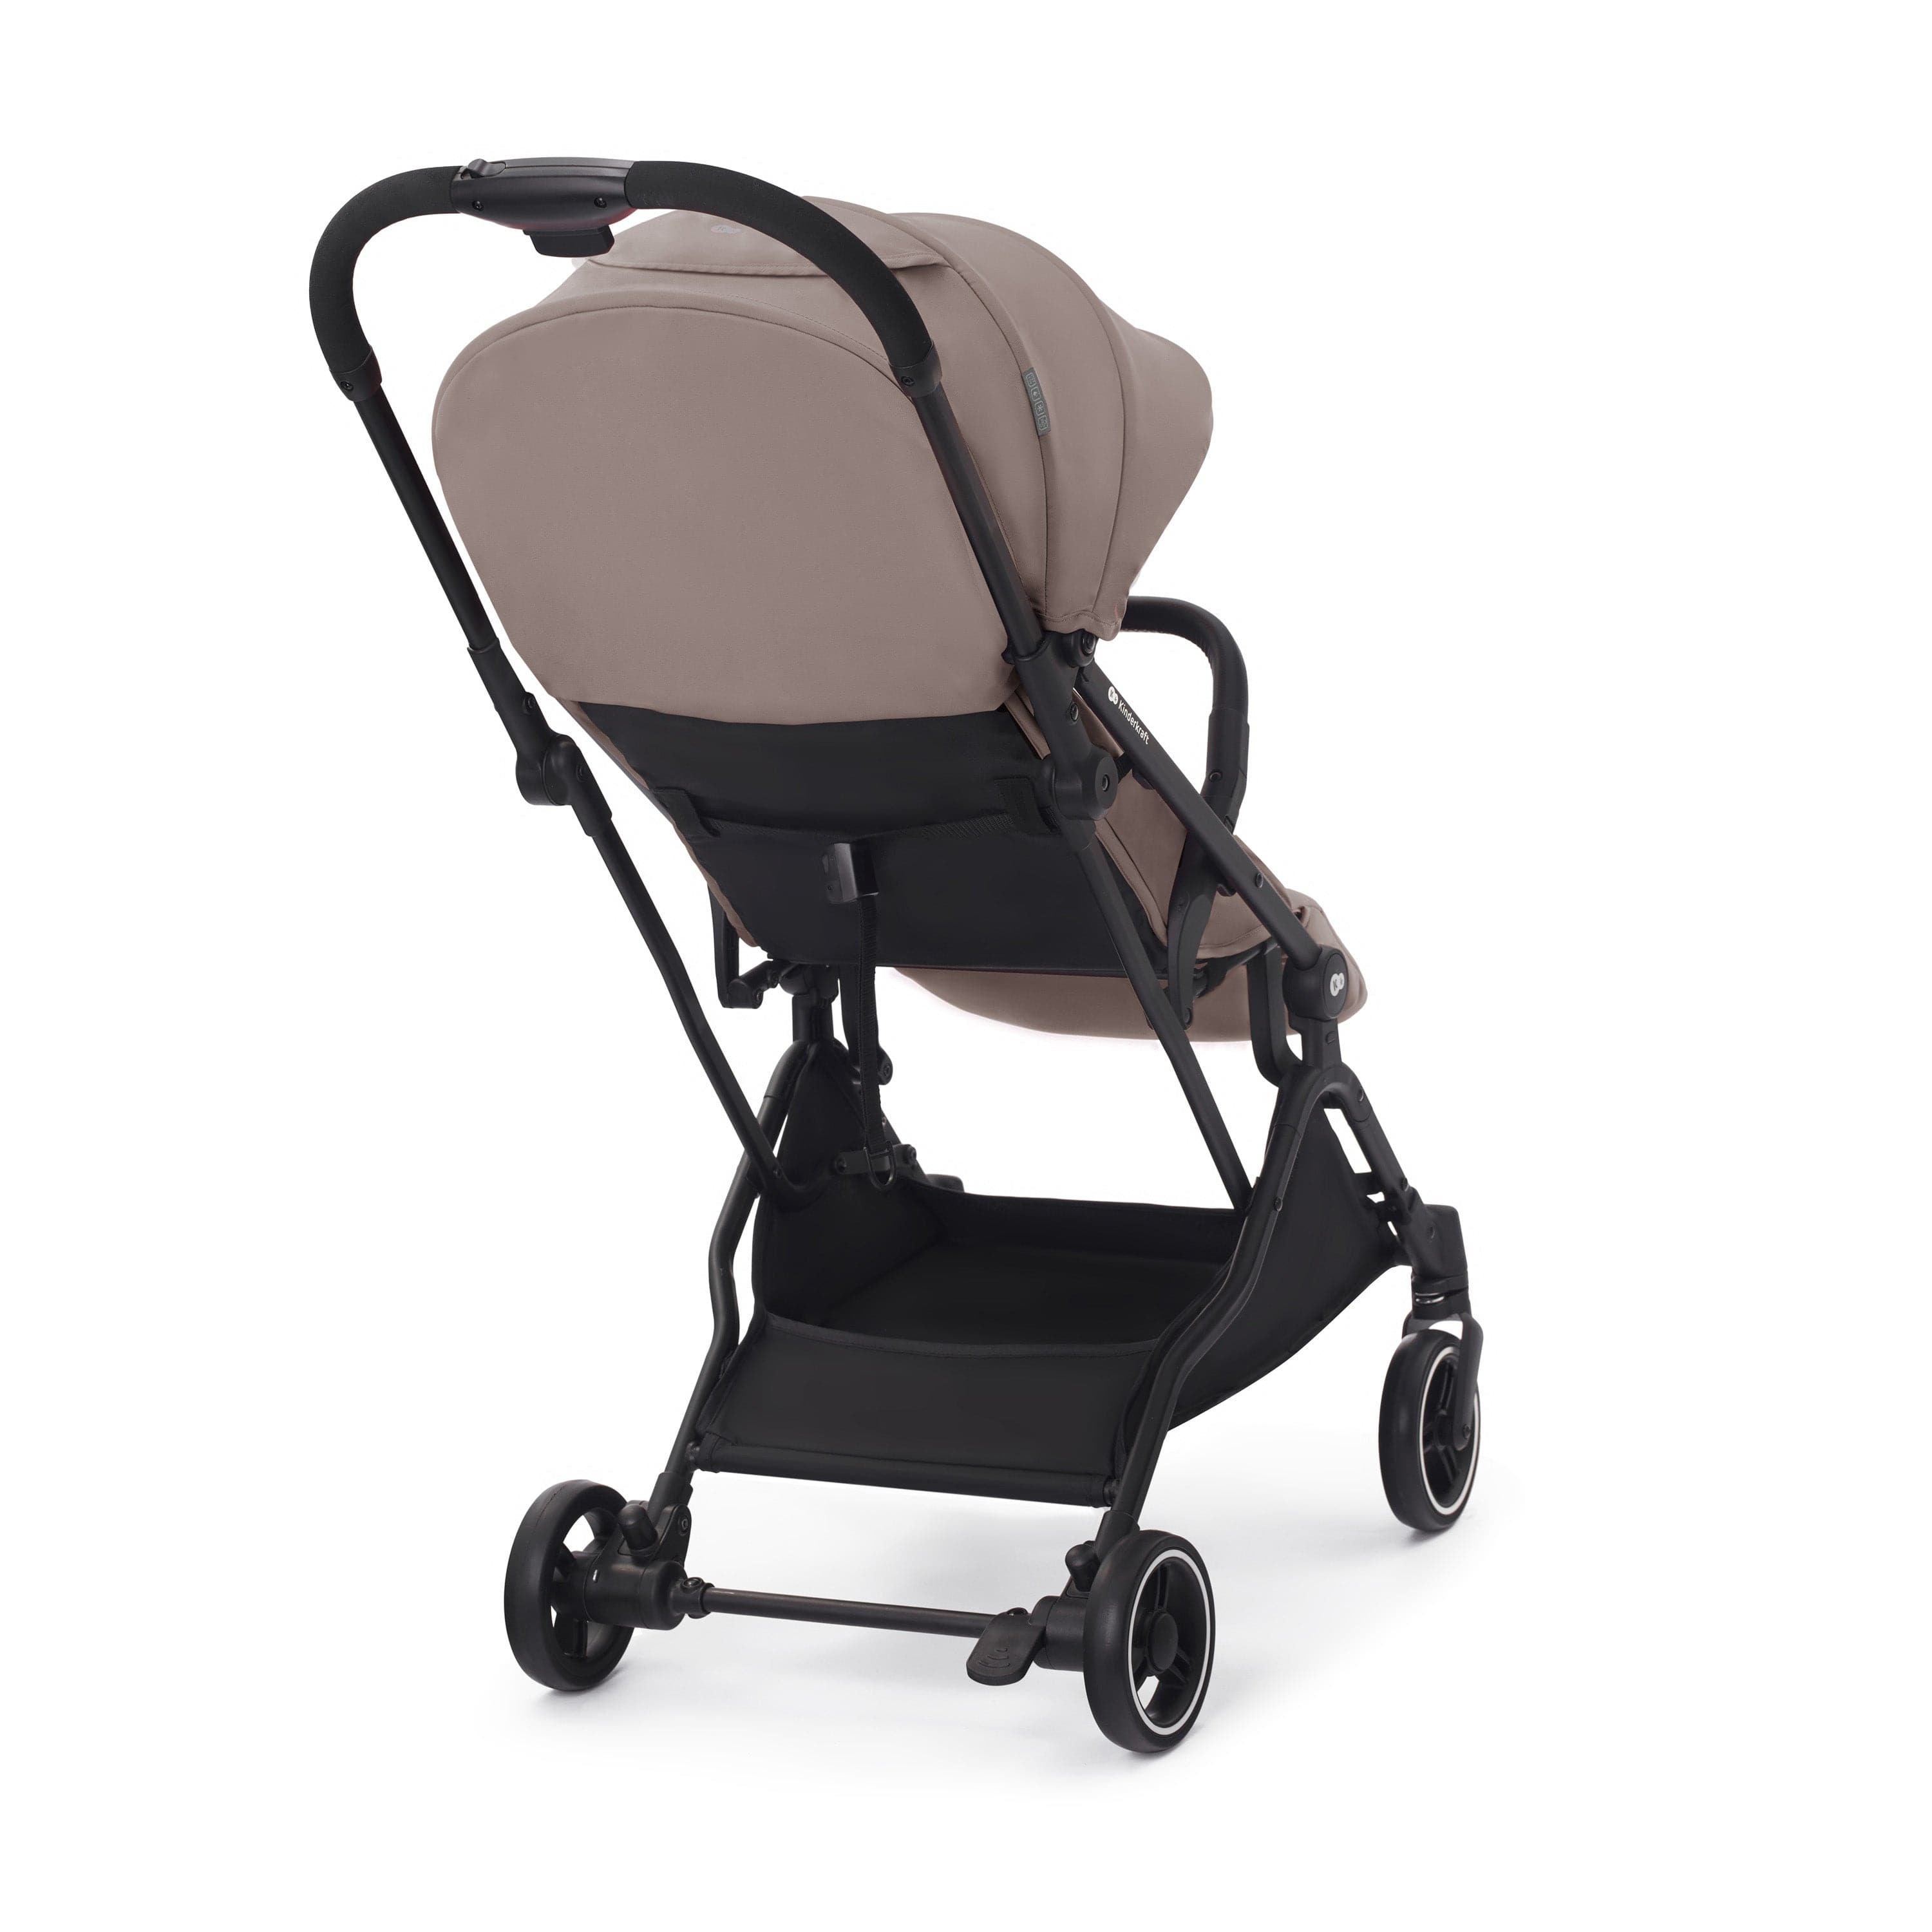 Kinderkraft pushchair Indy 2 - Calm Beige -  | For Your Little One